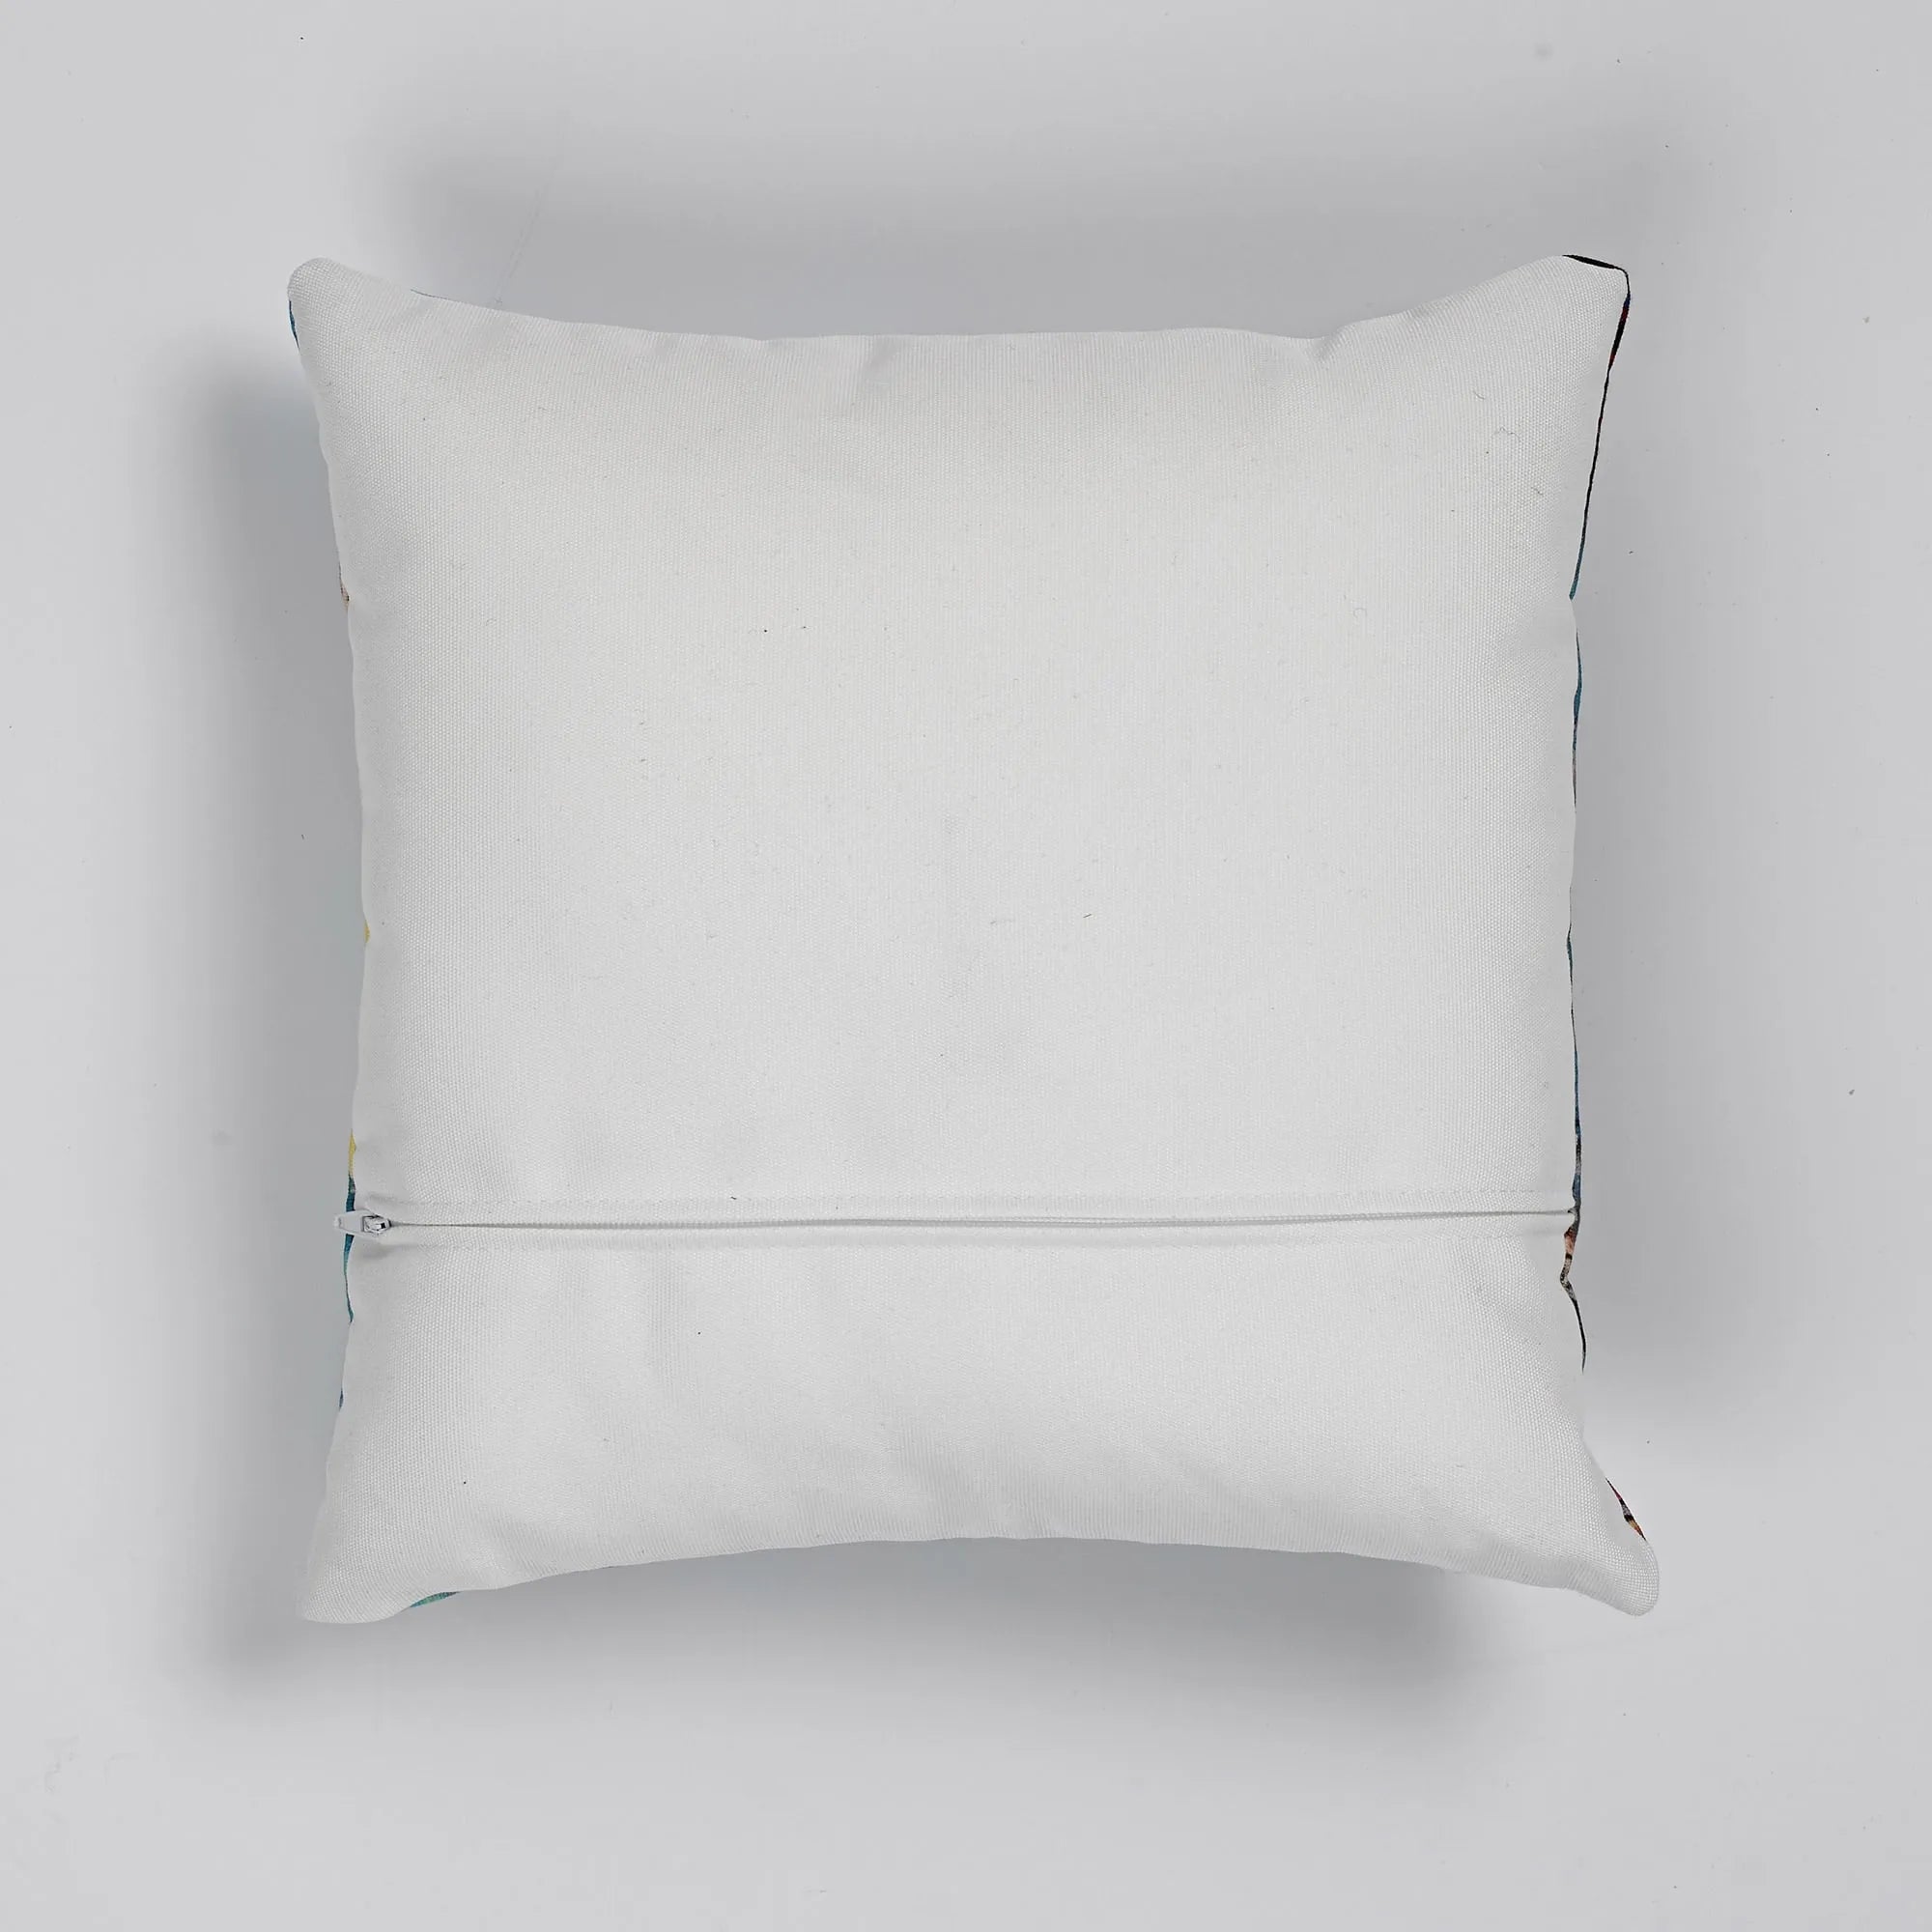 Oiseaux-mouches Et Orchidées - Maurice Pillard Verneuil Cushion - Decorative Throw Pillow - Throw Pillows - Aesthetic